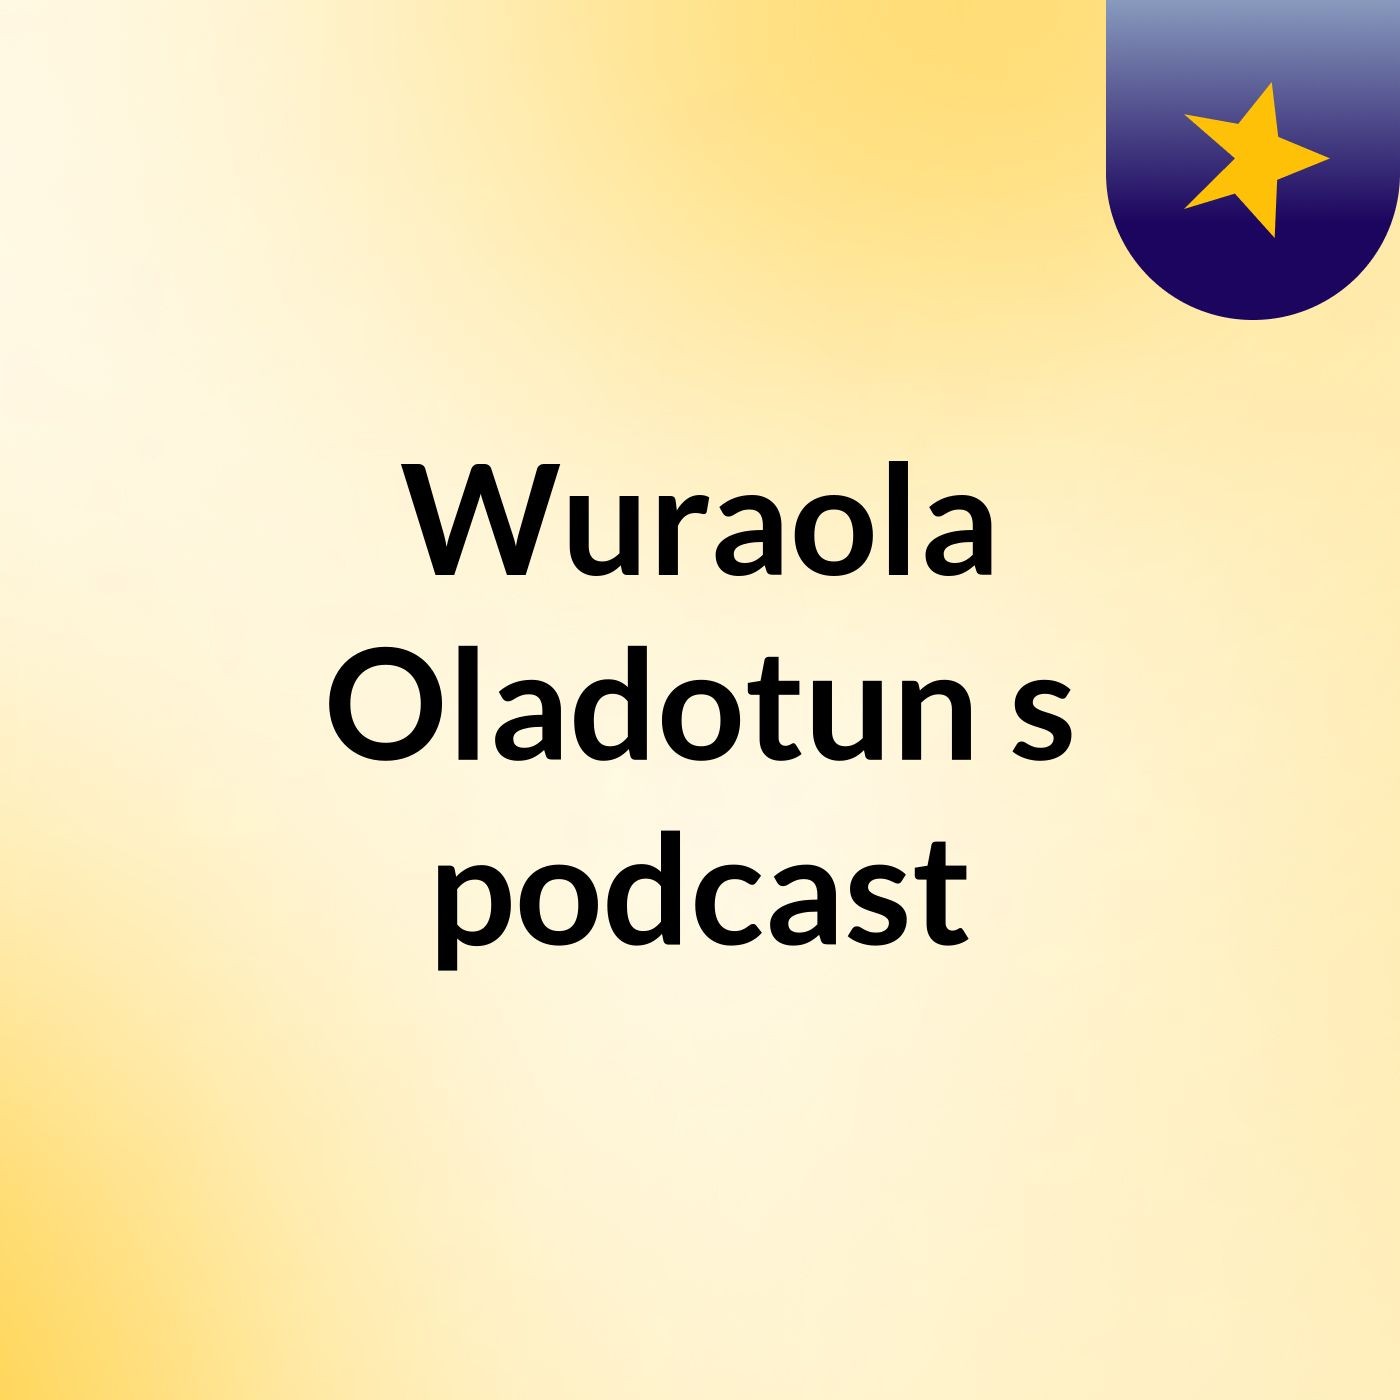 Episode 8 - Wuraola Oladotun's podcast